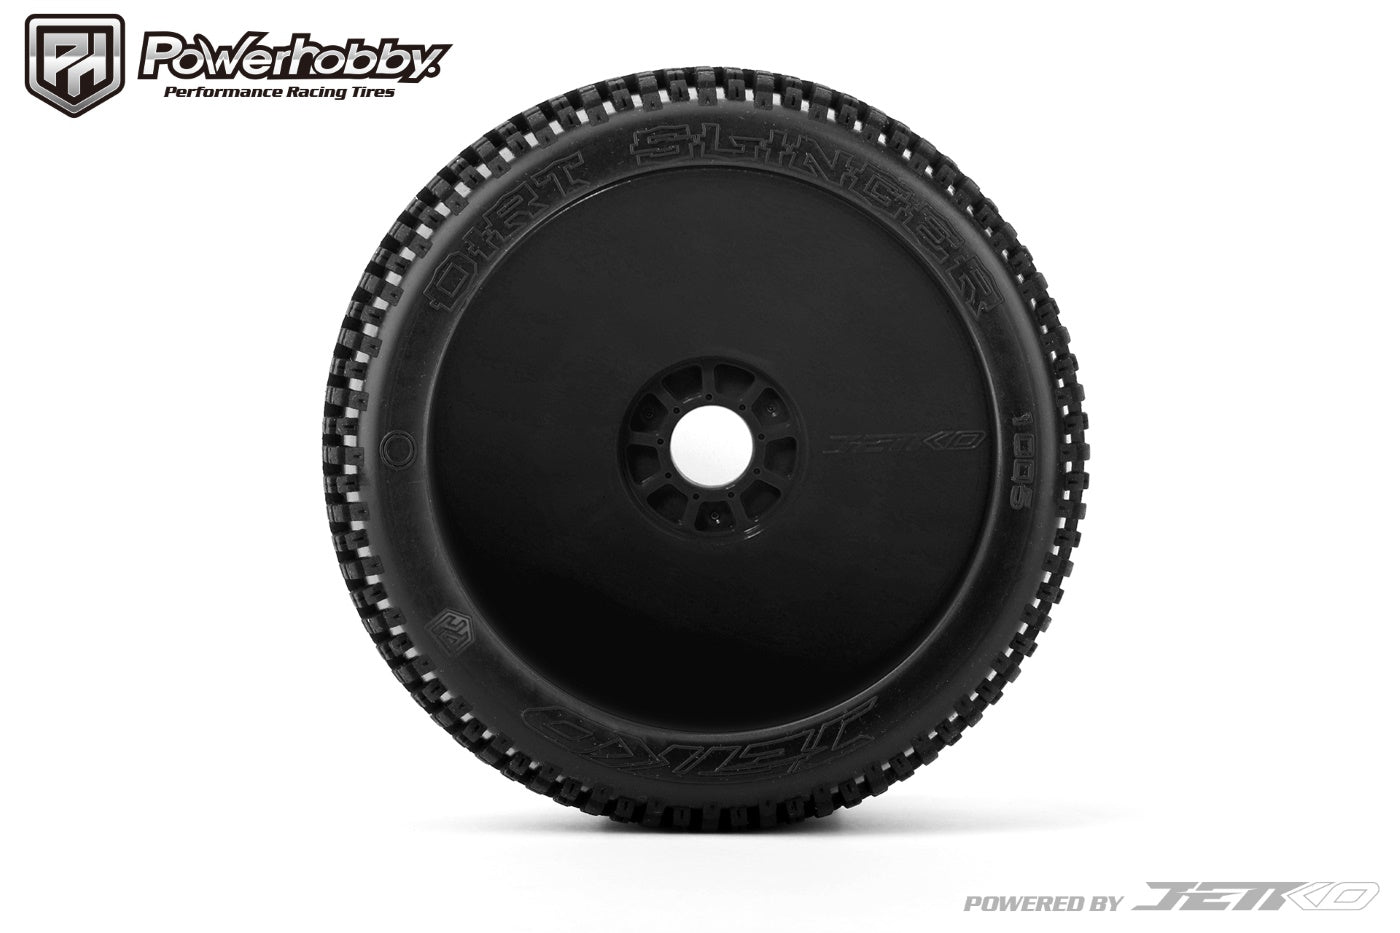 Powerhobby Dirt Slinger 1/8 Buggy Mounted Tires Black Dish Wheels (2) Medium Soft - PowerHobby